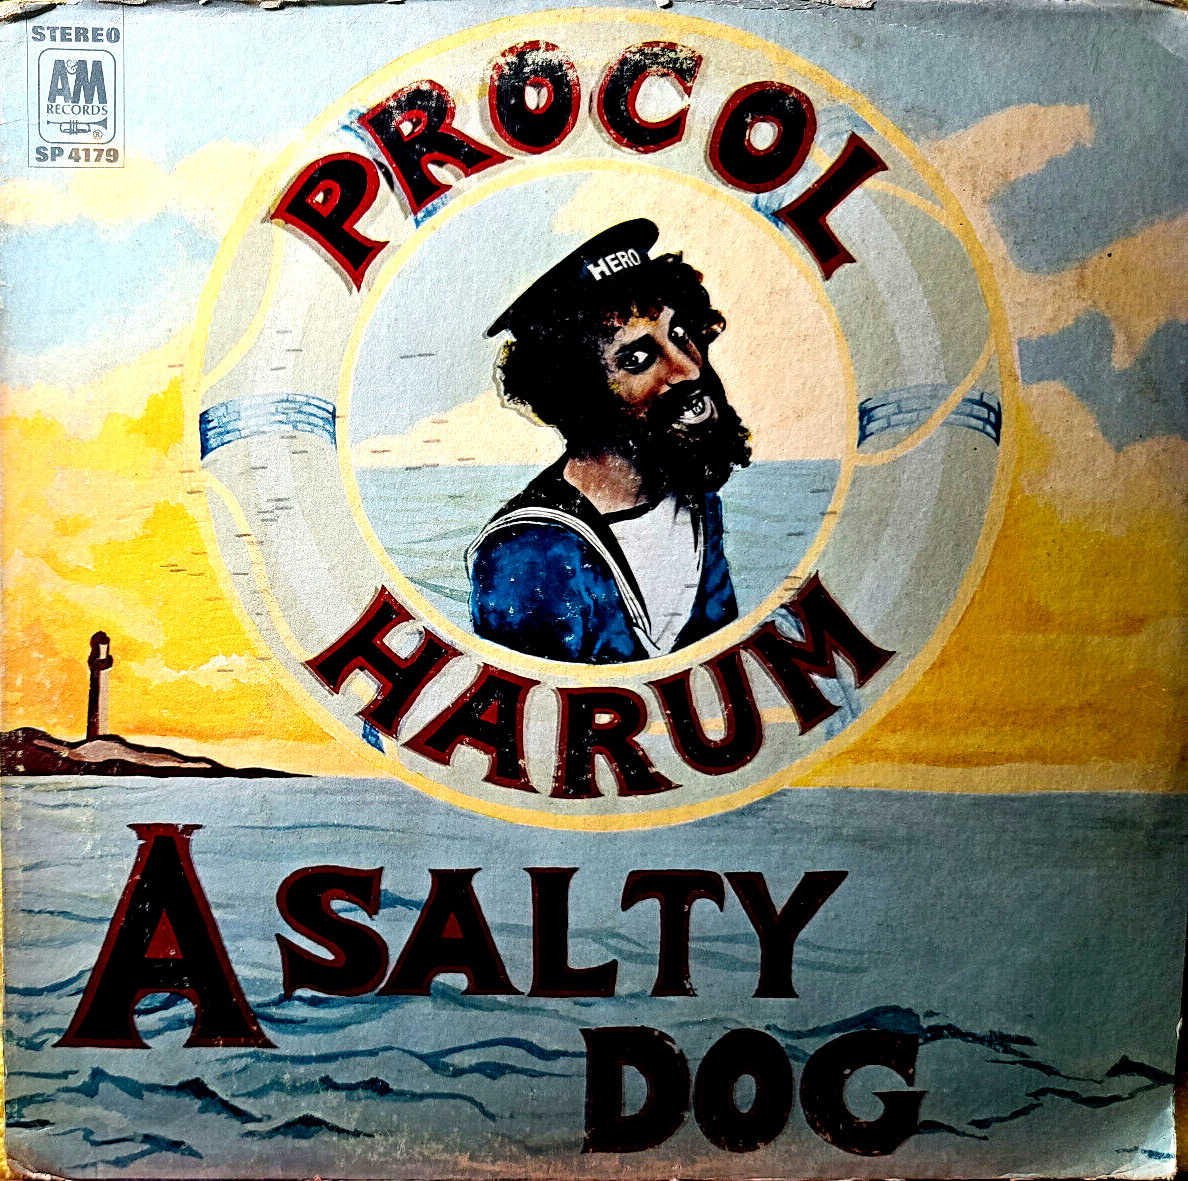 PROCOL HARUM LP A SALTY DOG - A&M SP4179 (VINYL G+ / JACKET VG) FREE SHIPPING